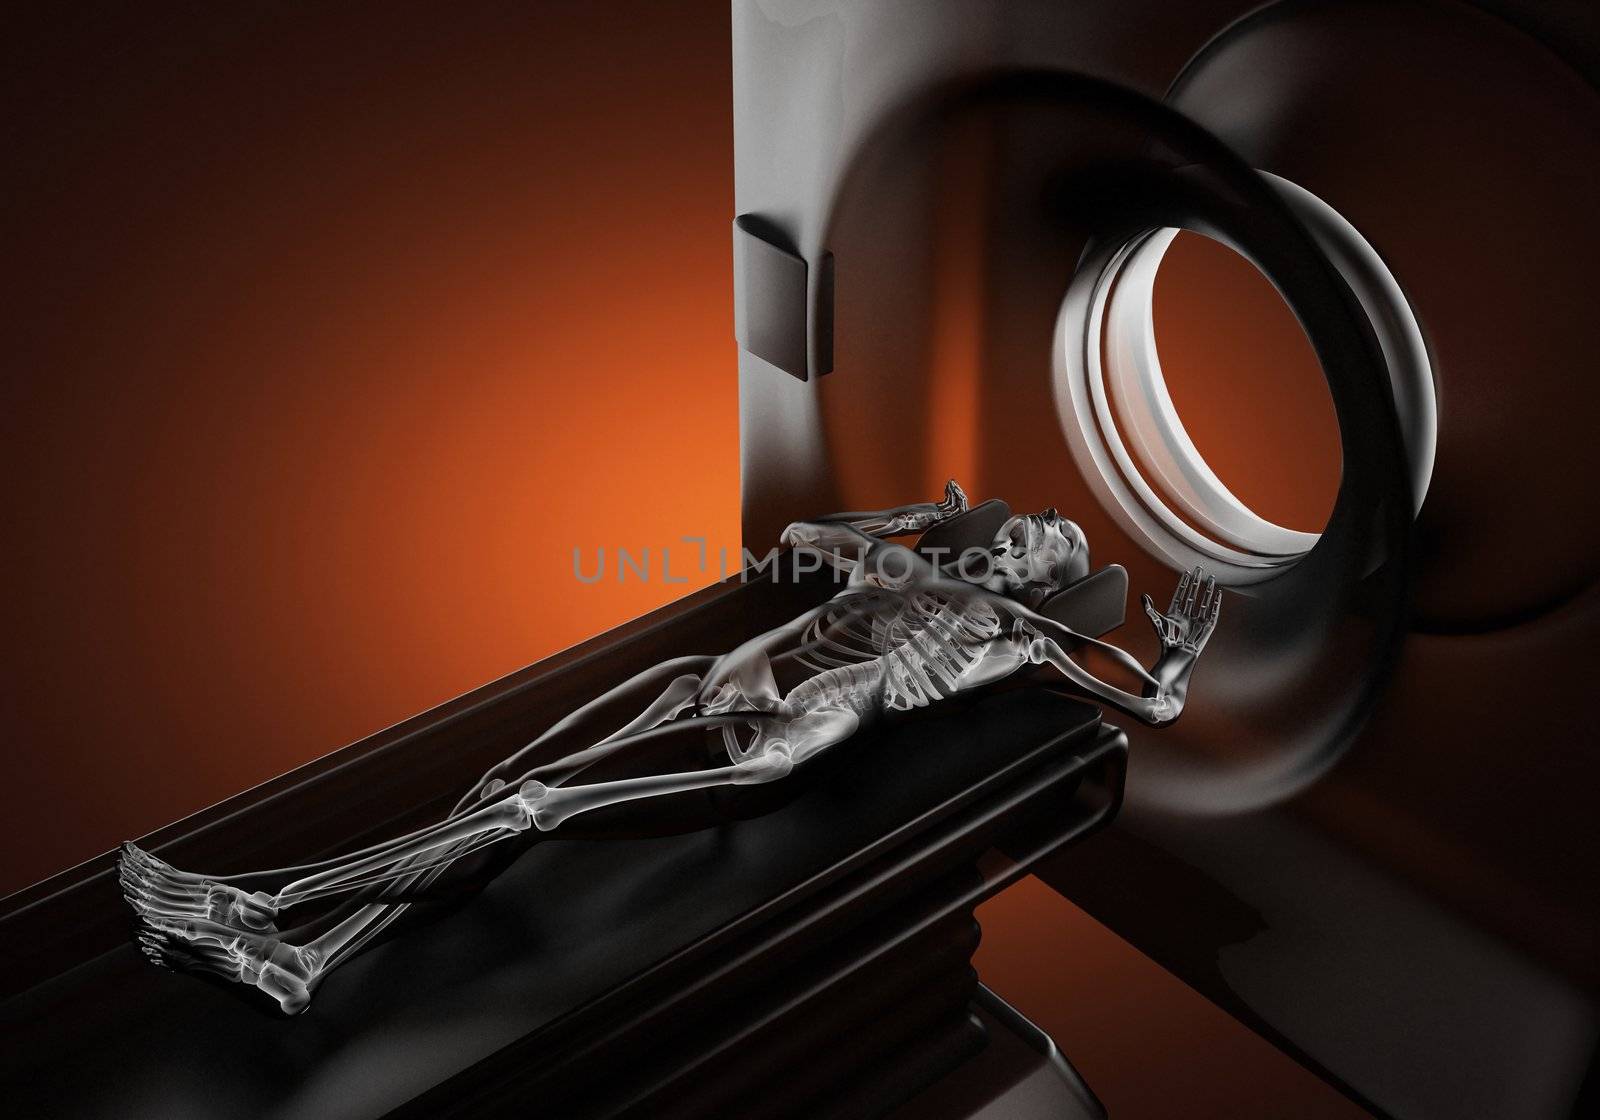 MRI examination by videodoctor